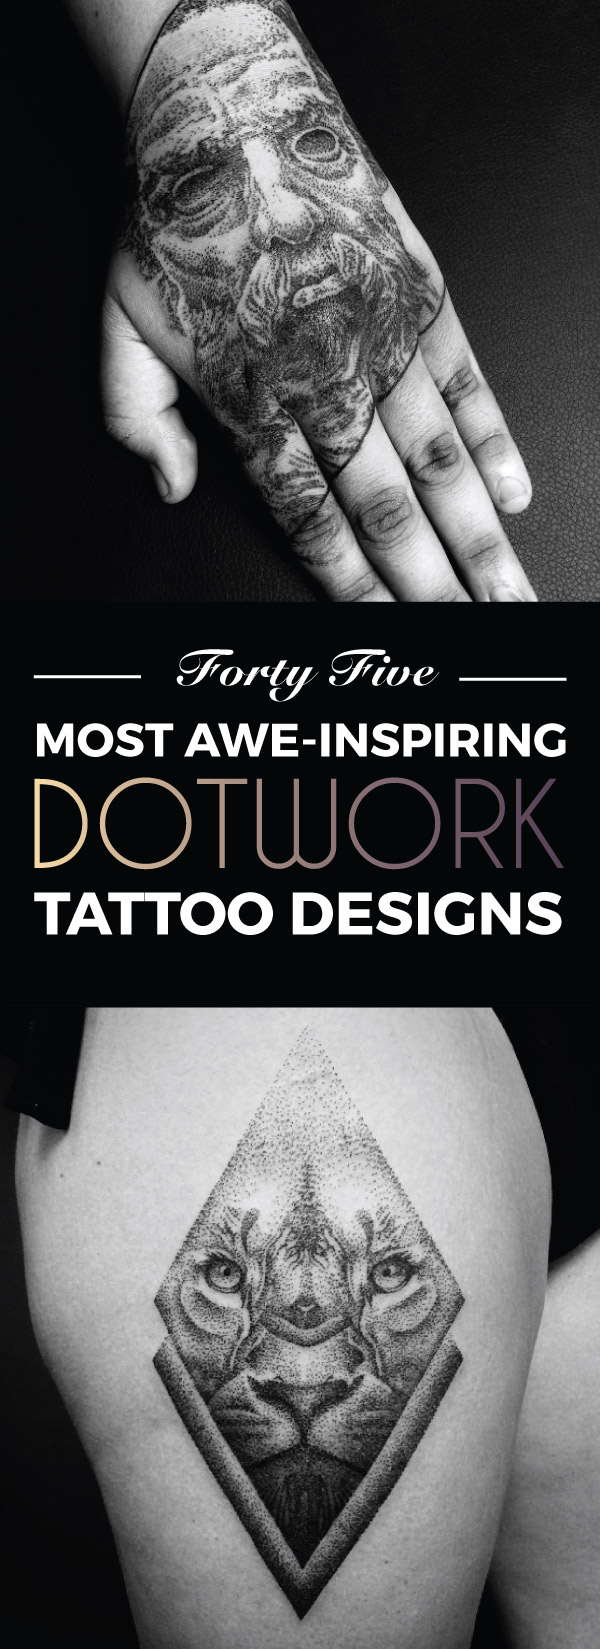 45 Most Awe-Inspiring Dotwork Tattoo Designs - TattooBlend